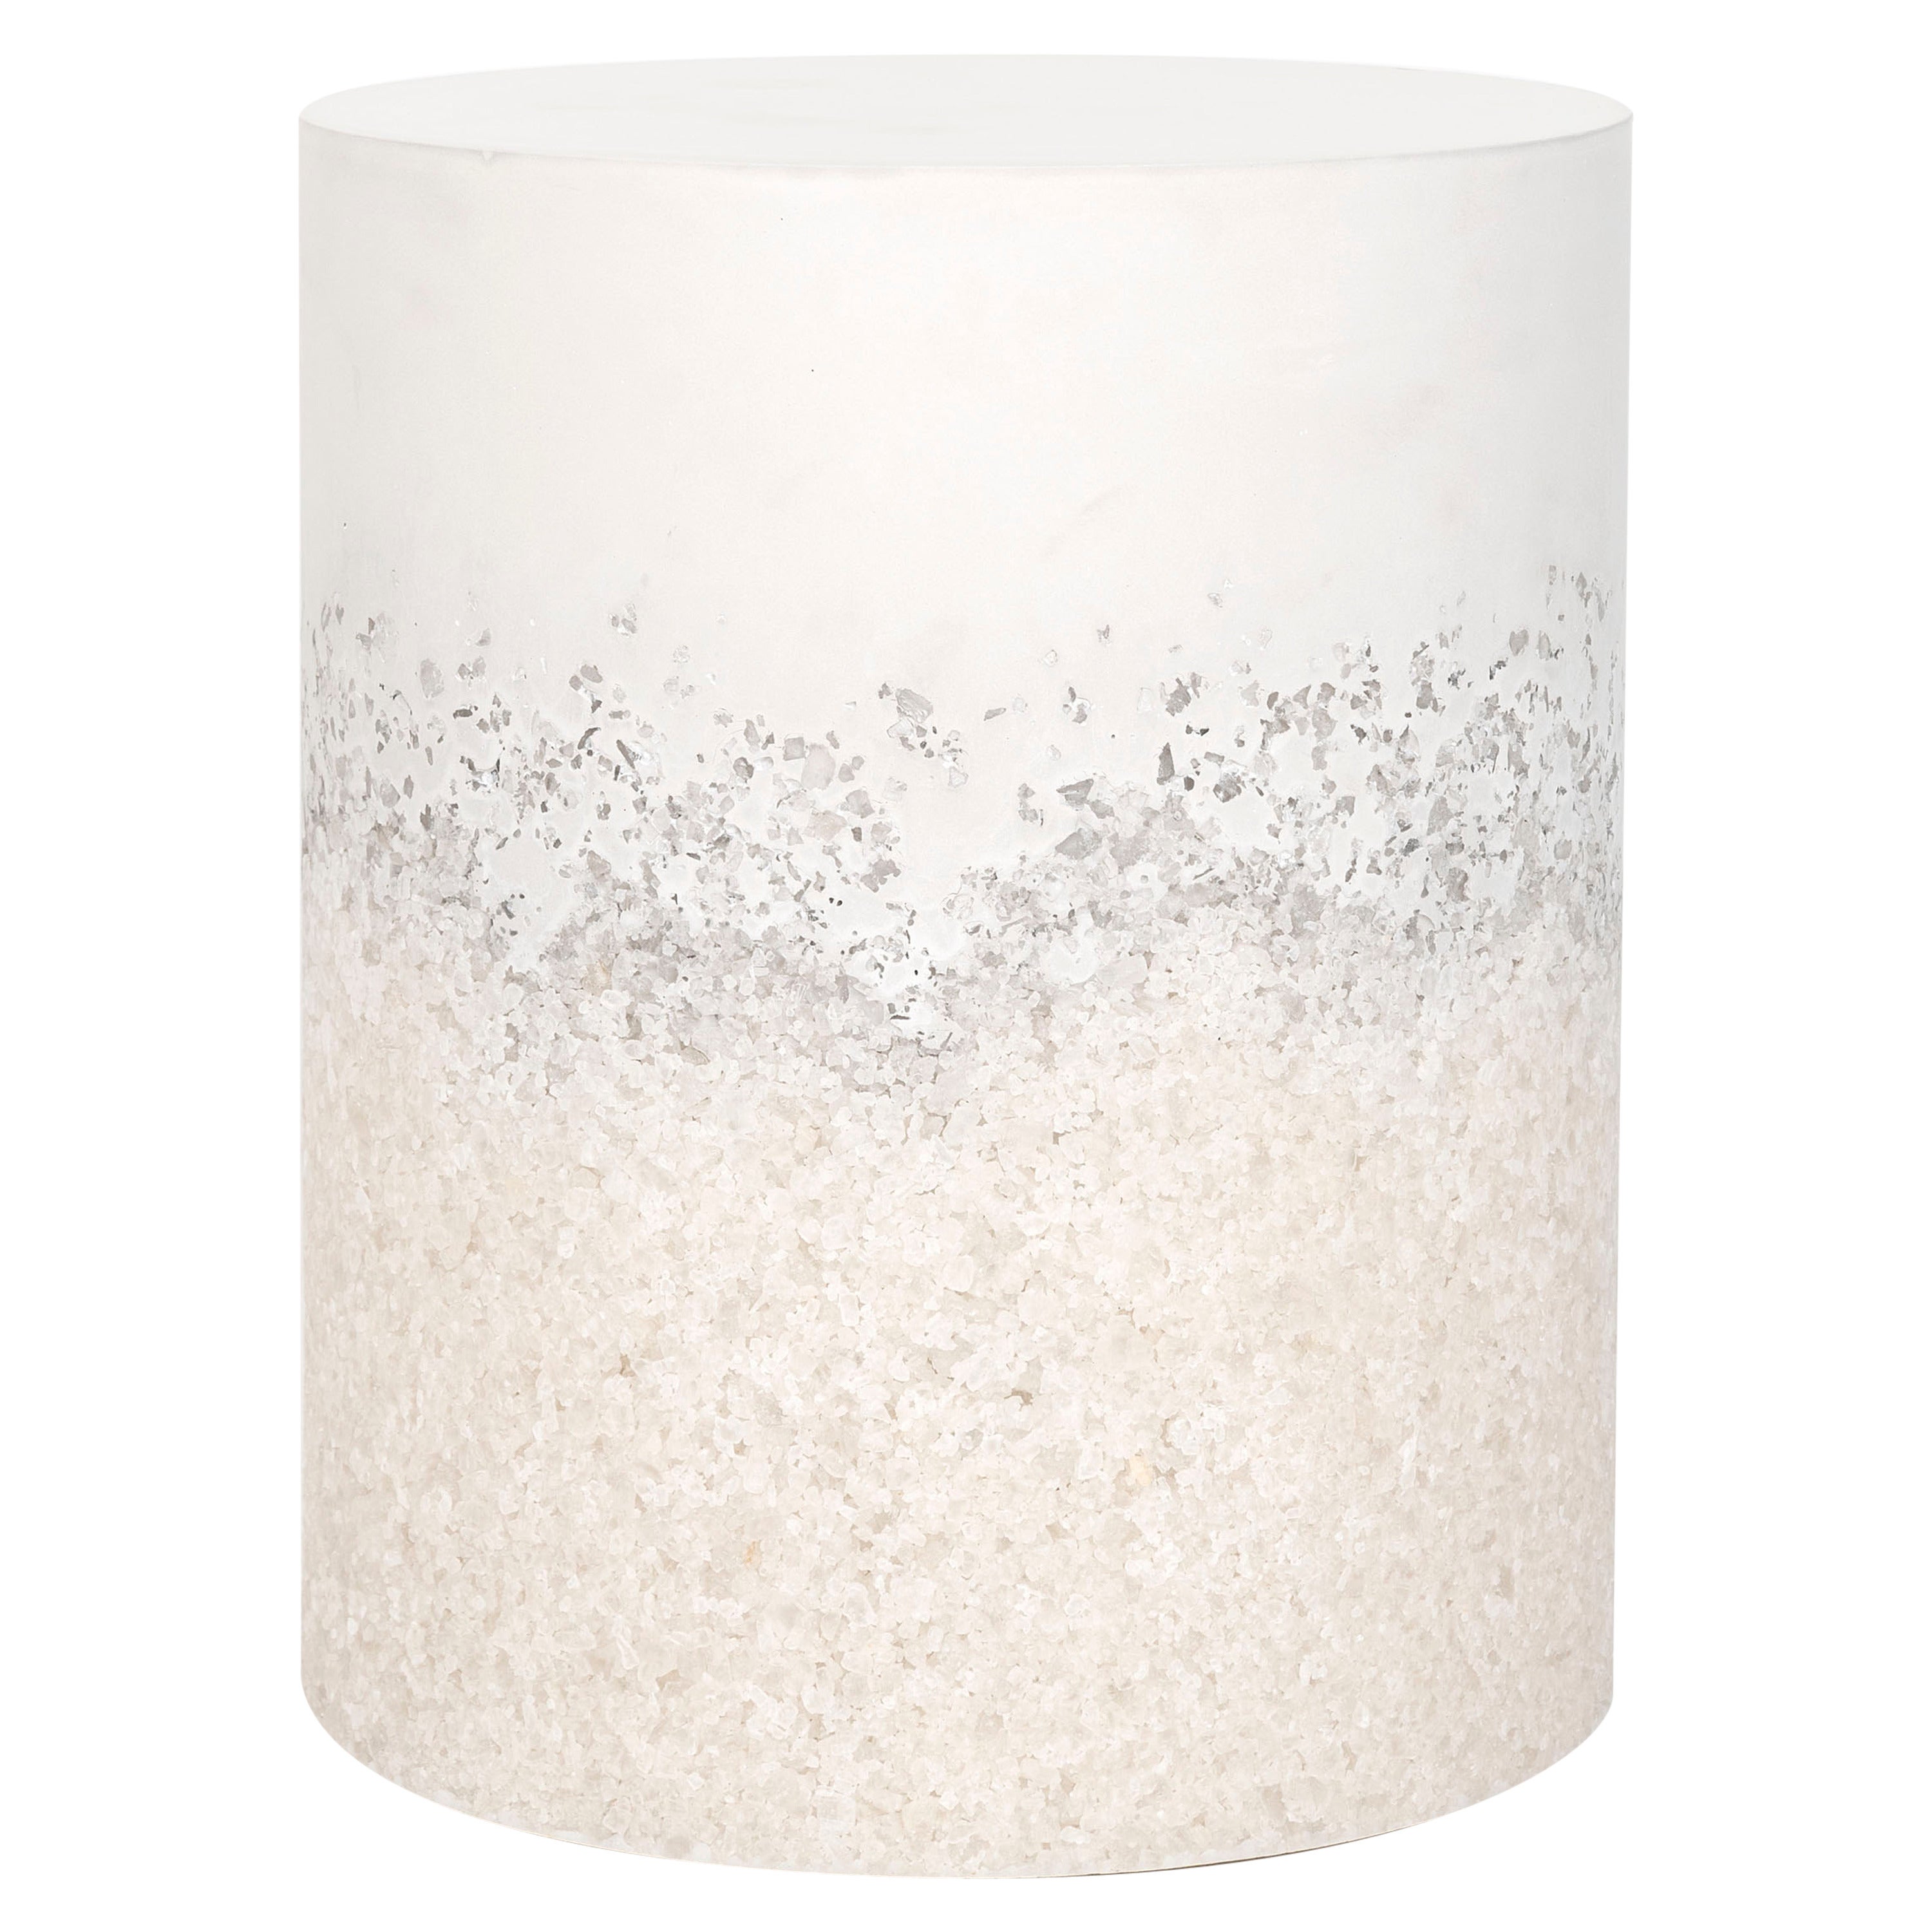 White Cement and White Rock Salt Drum by Fernando Mastrangelo For Sale